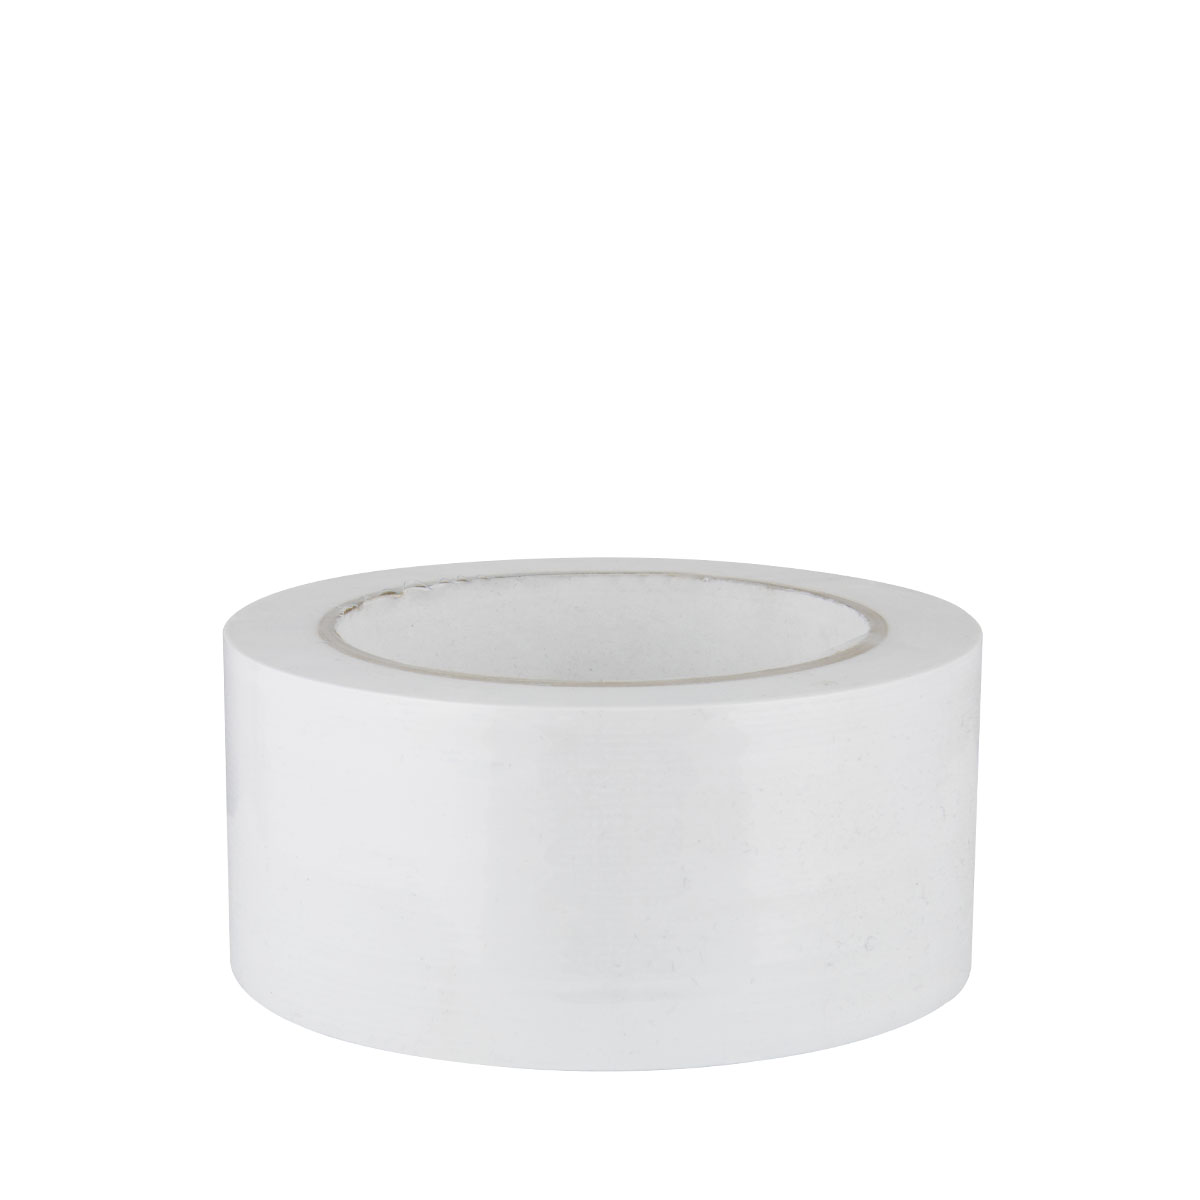 Farbklecks24 Verputzerband PVC Glatt 50mm x 33m, weiß, Schutzband